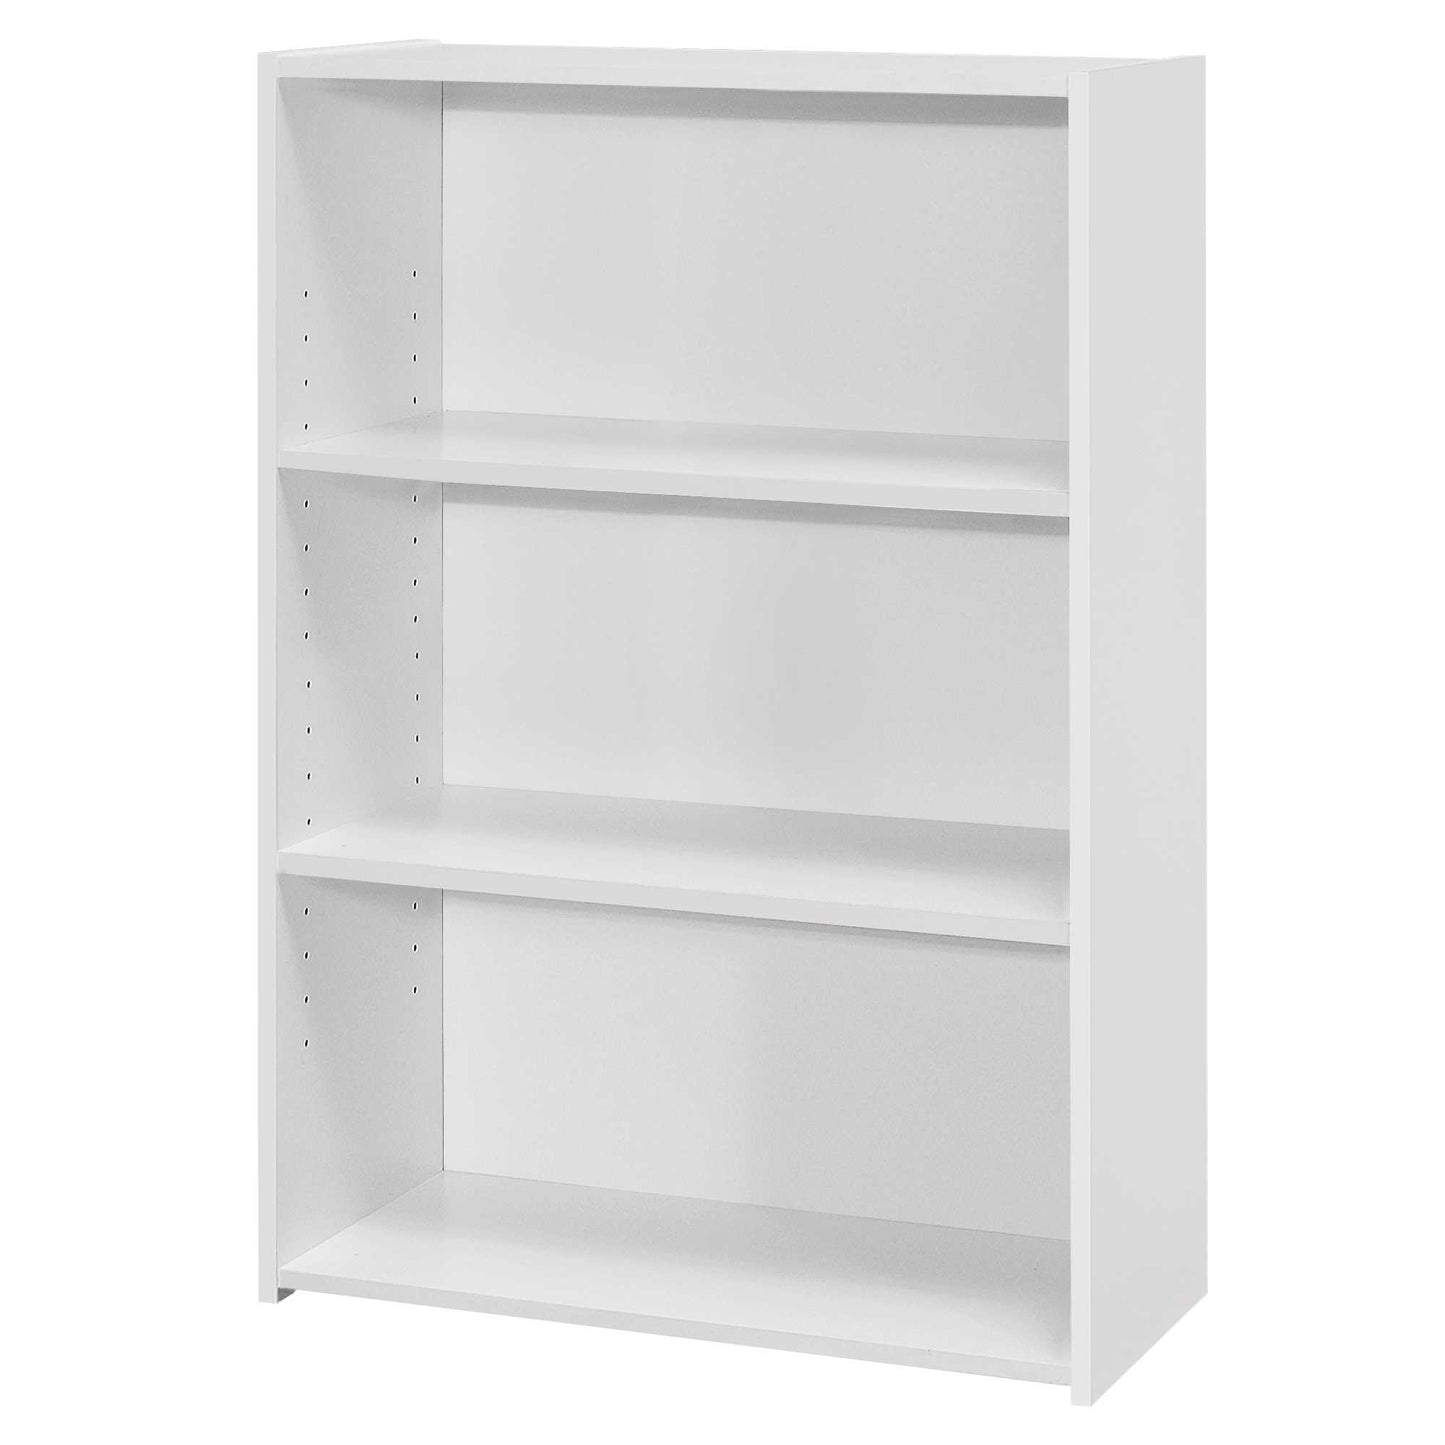 36" White Adjustable Three Tier Standard Bookcase